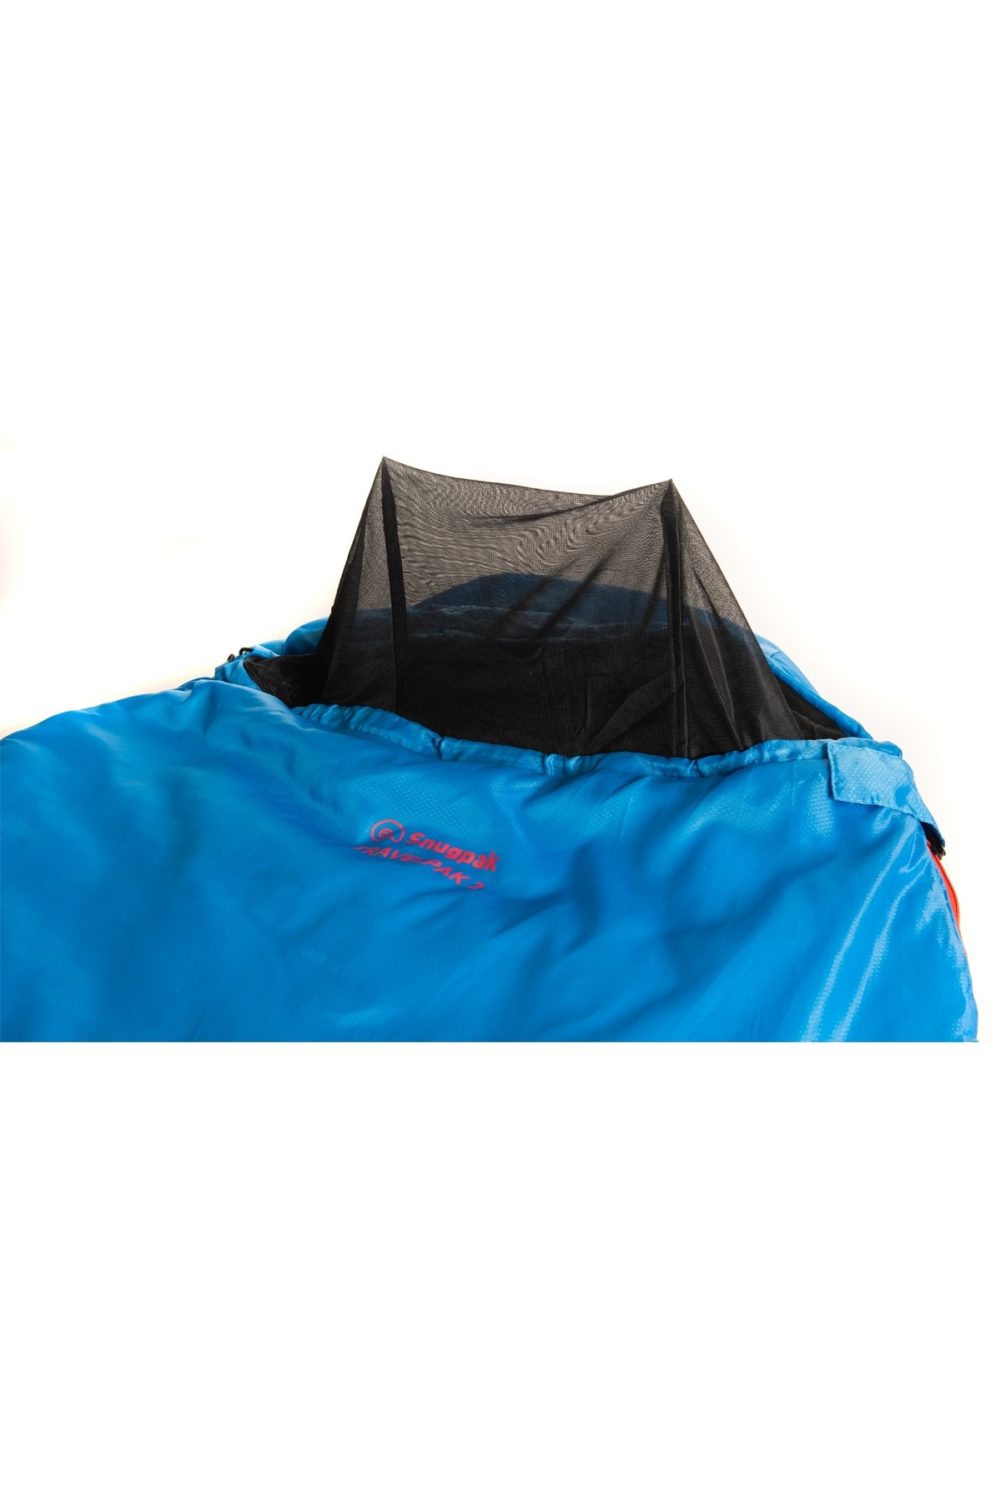 Snugpak Travelpak 2 Sleeping Bag (Electric Blue)